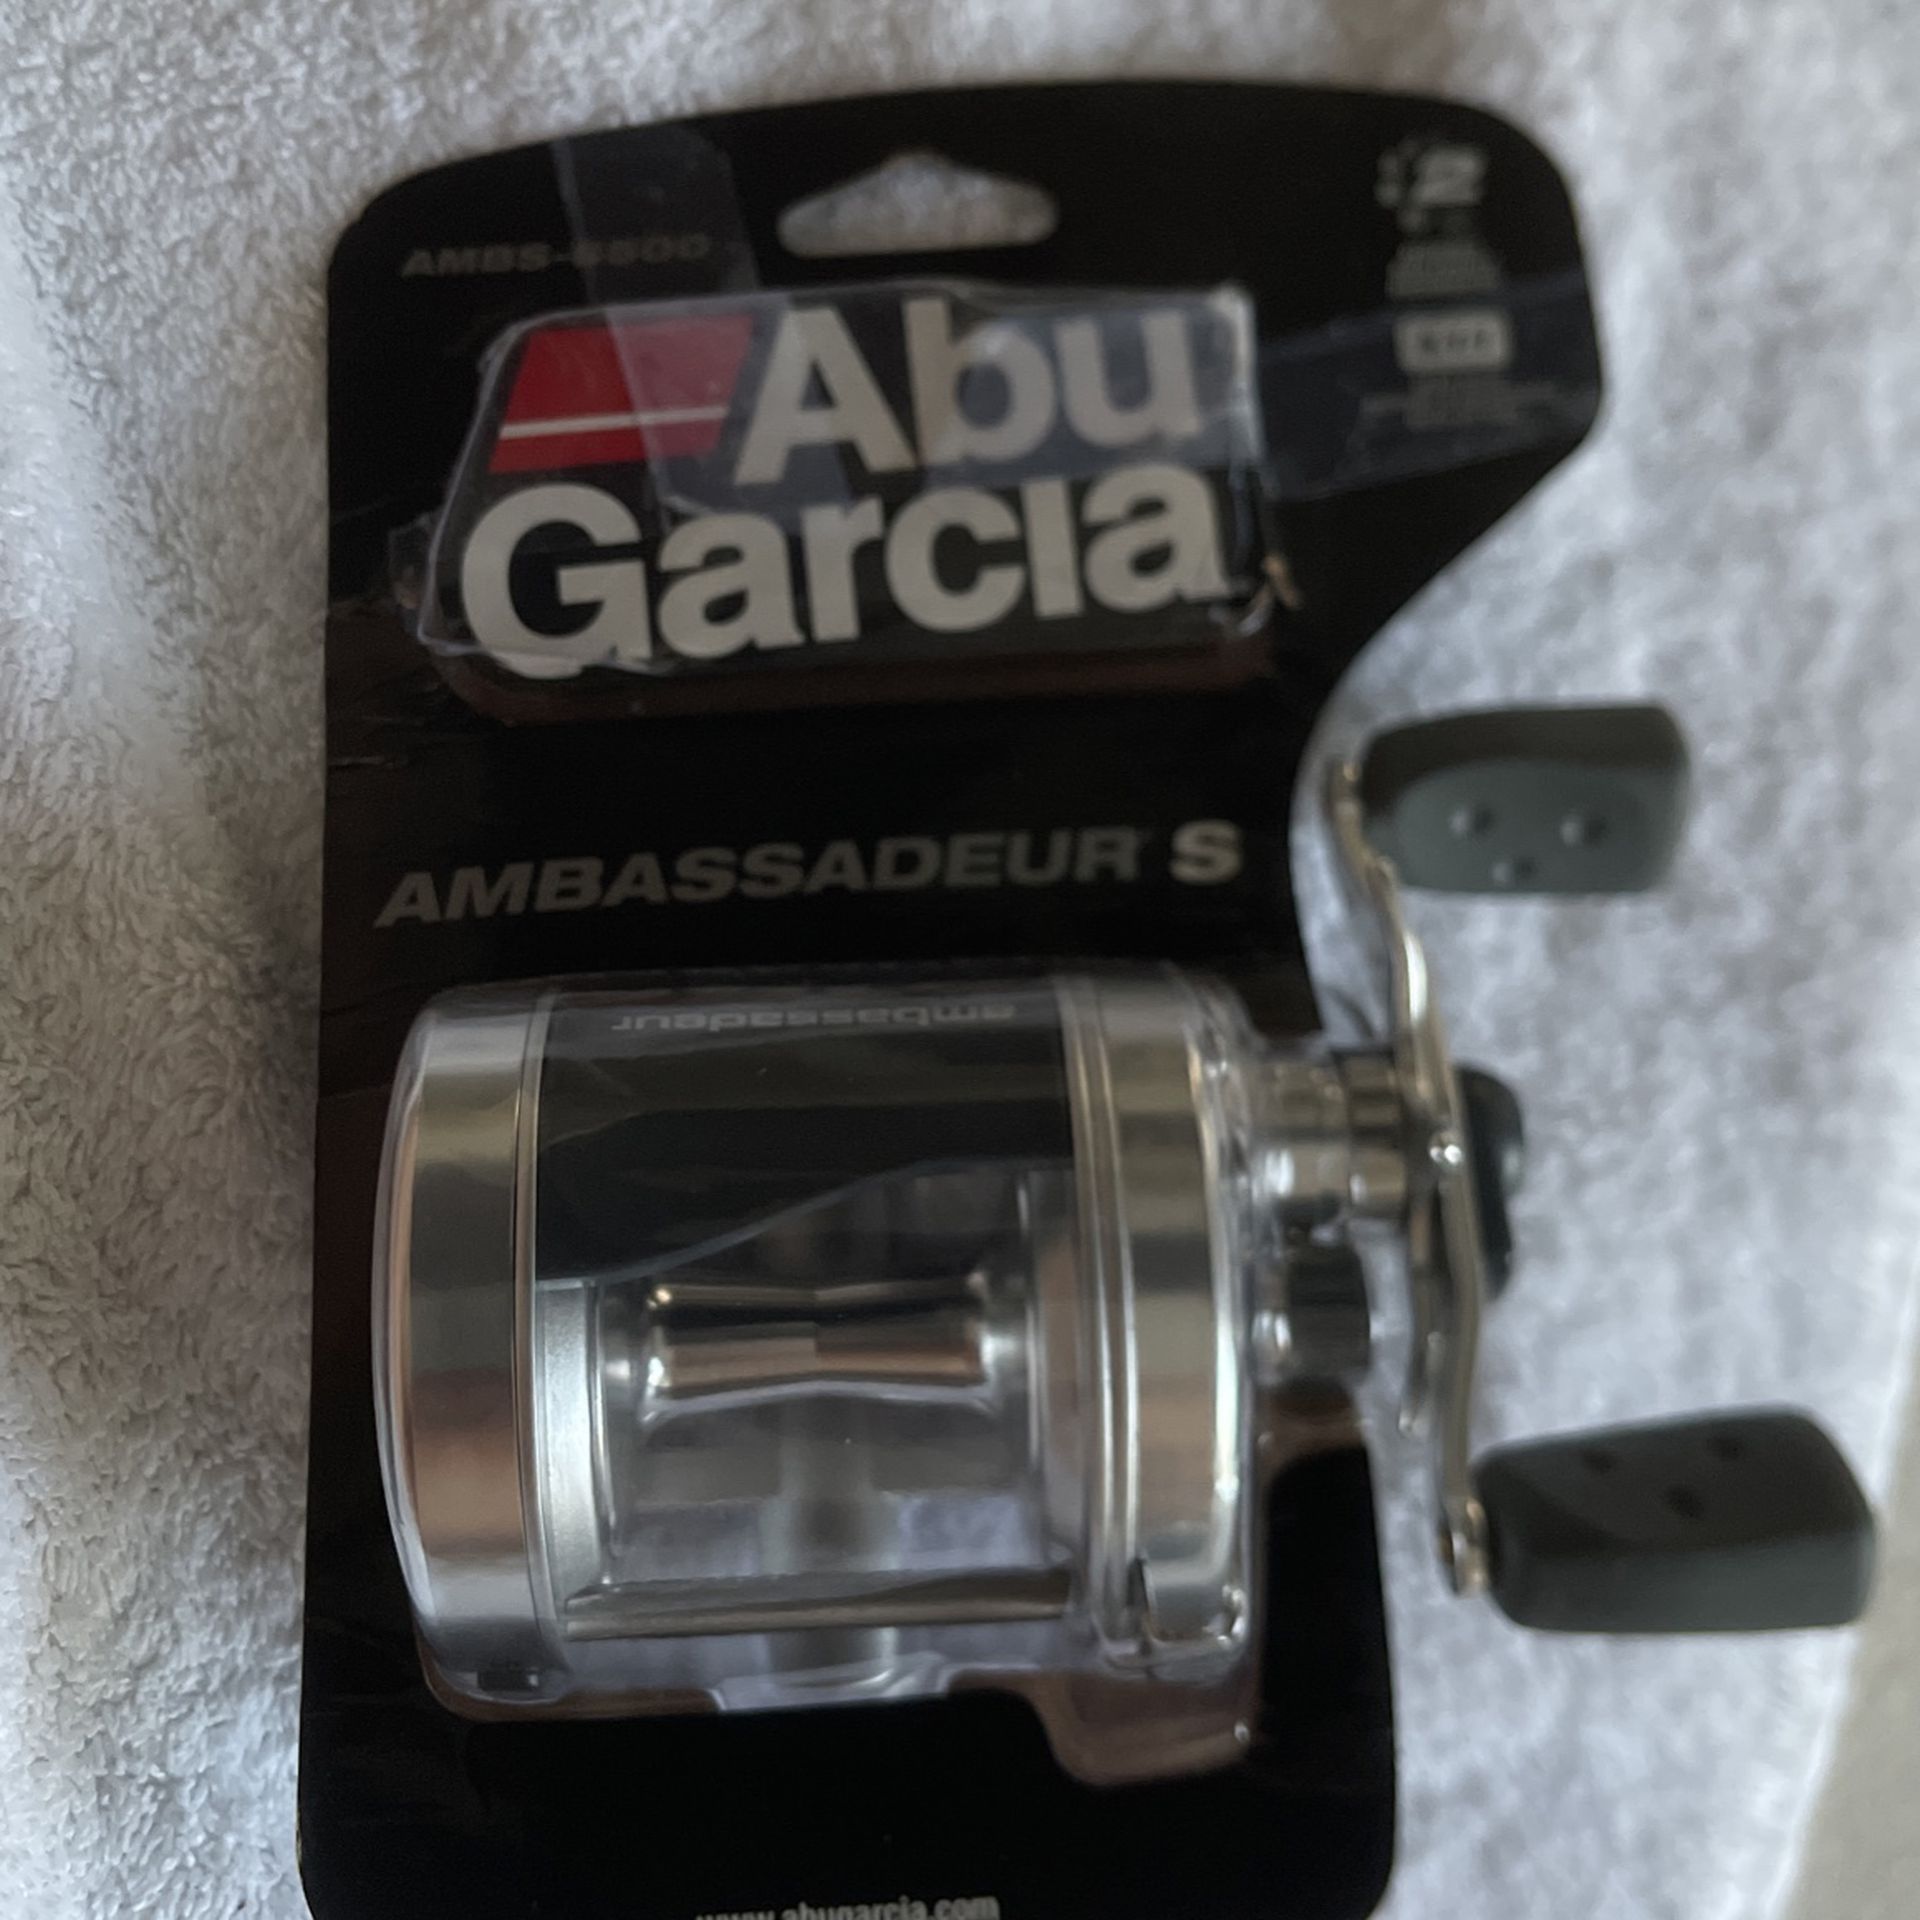 Abu Garcia AMBS-6500 Fishing Reel - Brand New!